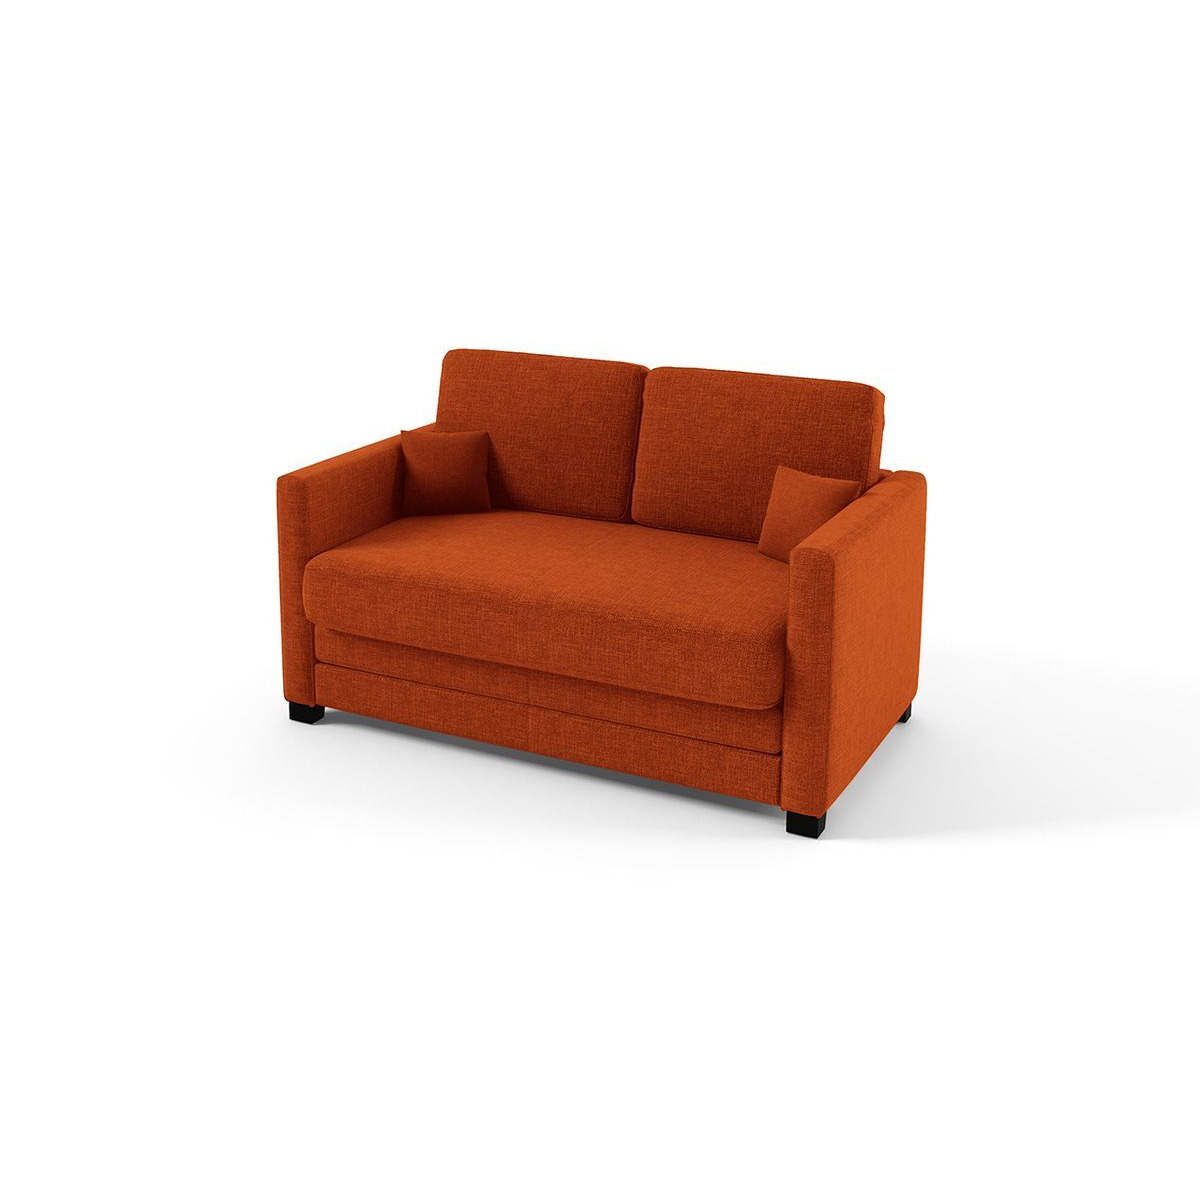 Boom 2 Seater Sofa Bed, orange - image 1